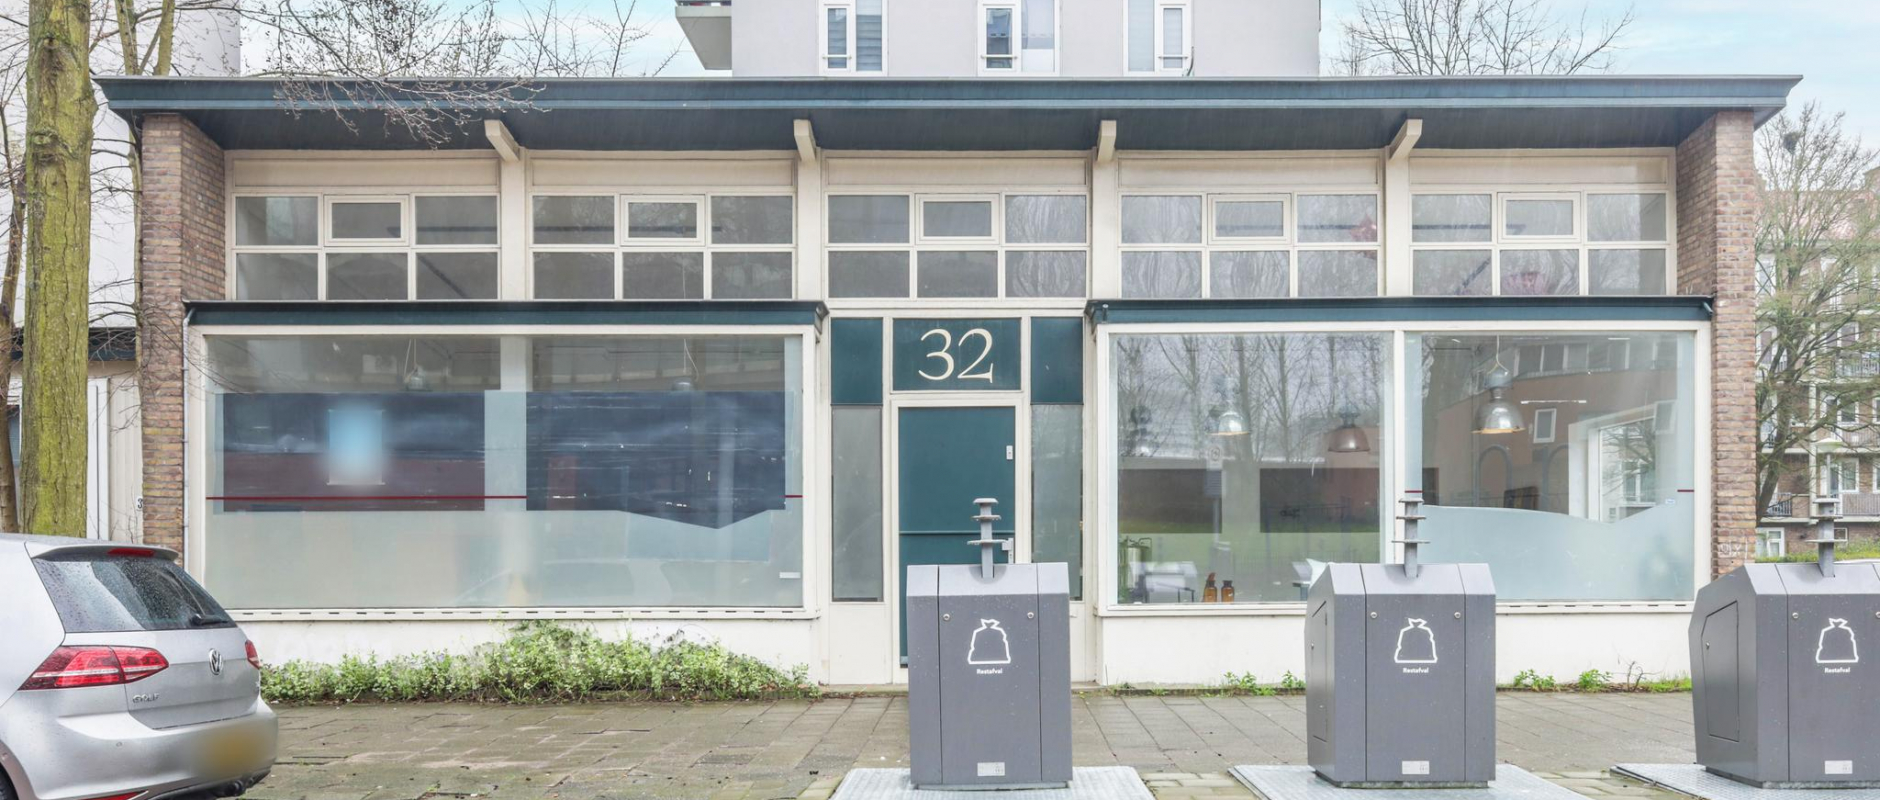 Woning te koop aan de Jacques Veltmanstraat 34 te Amsterdam